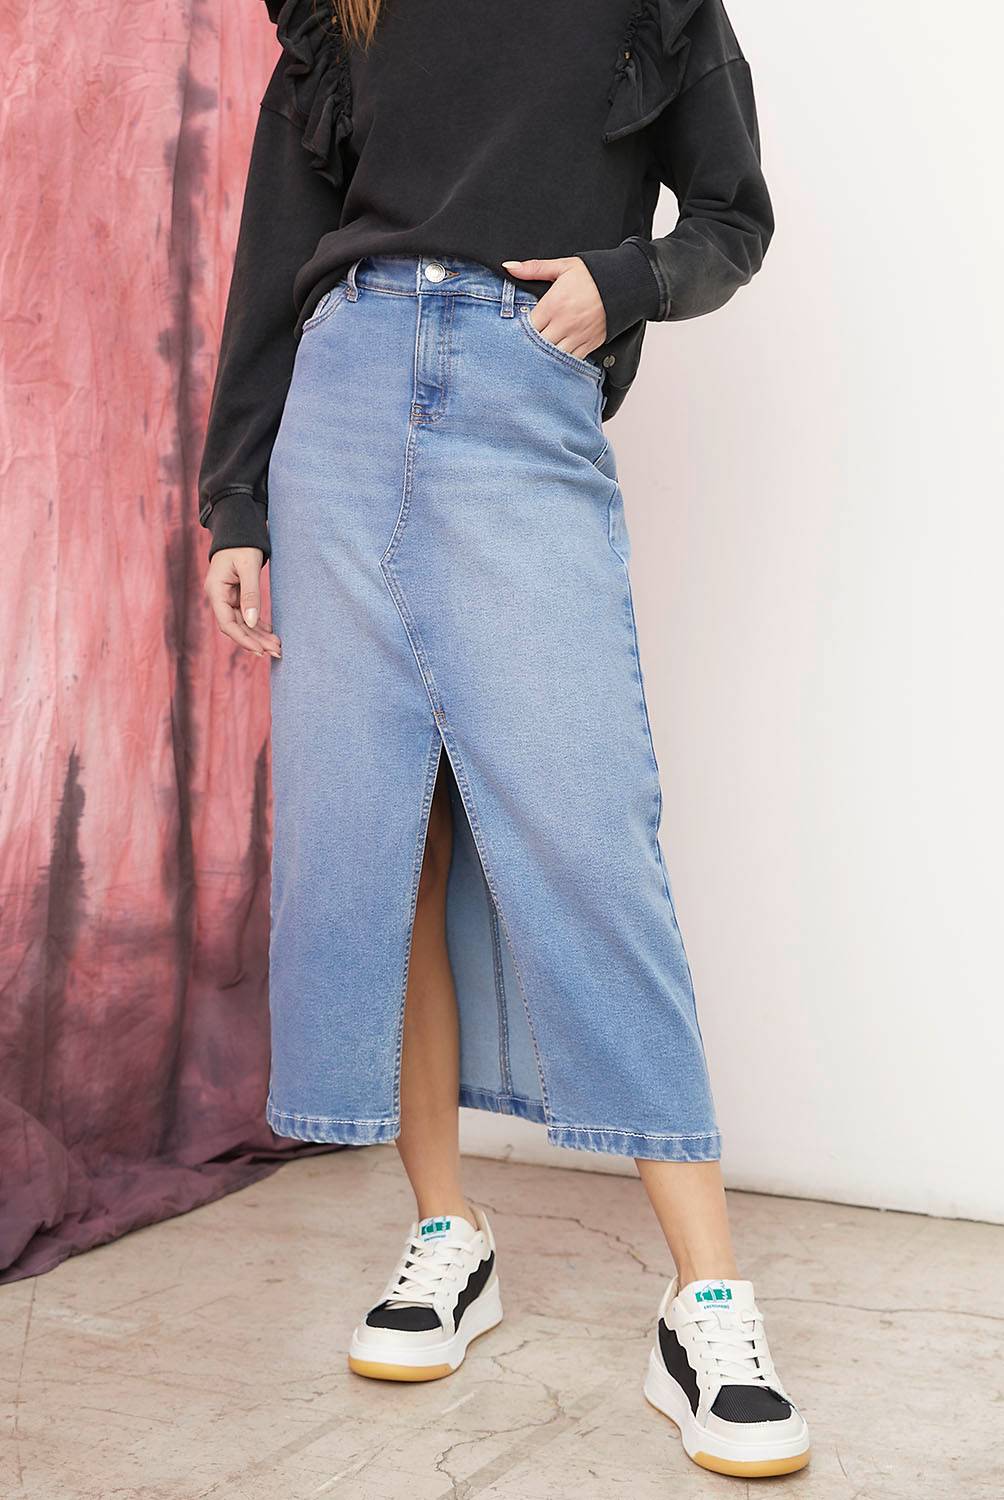 AMERICANINO - Americanino Falda Jeans Corta Mujer